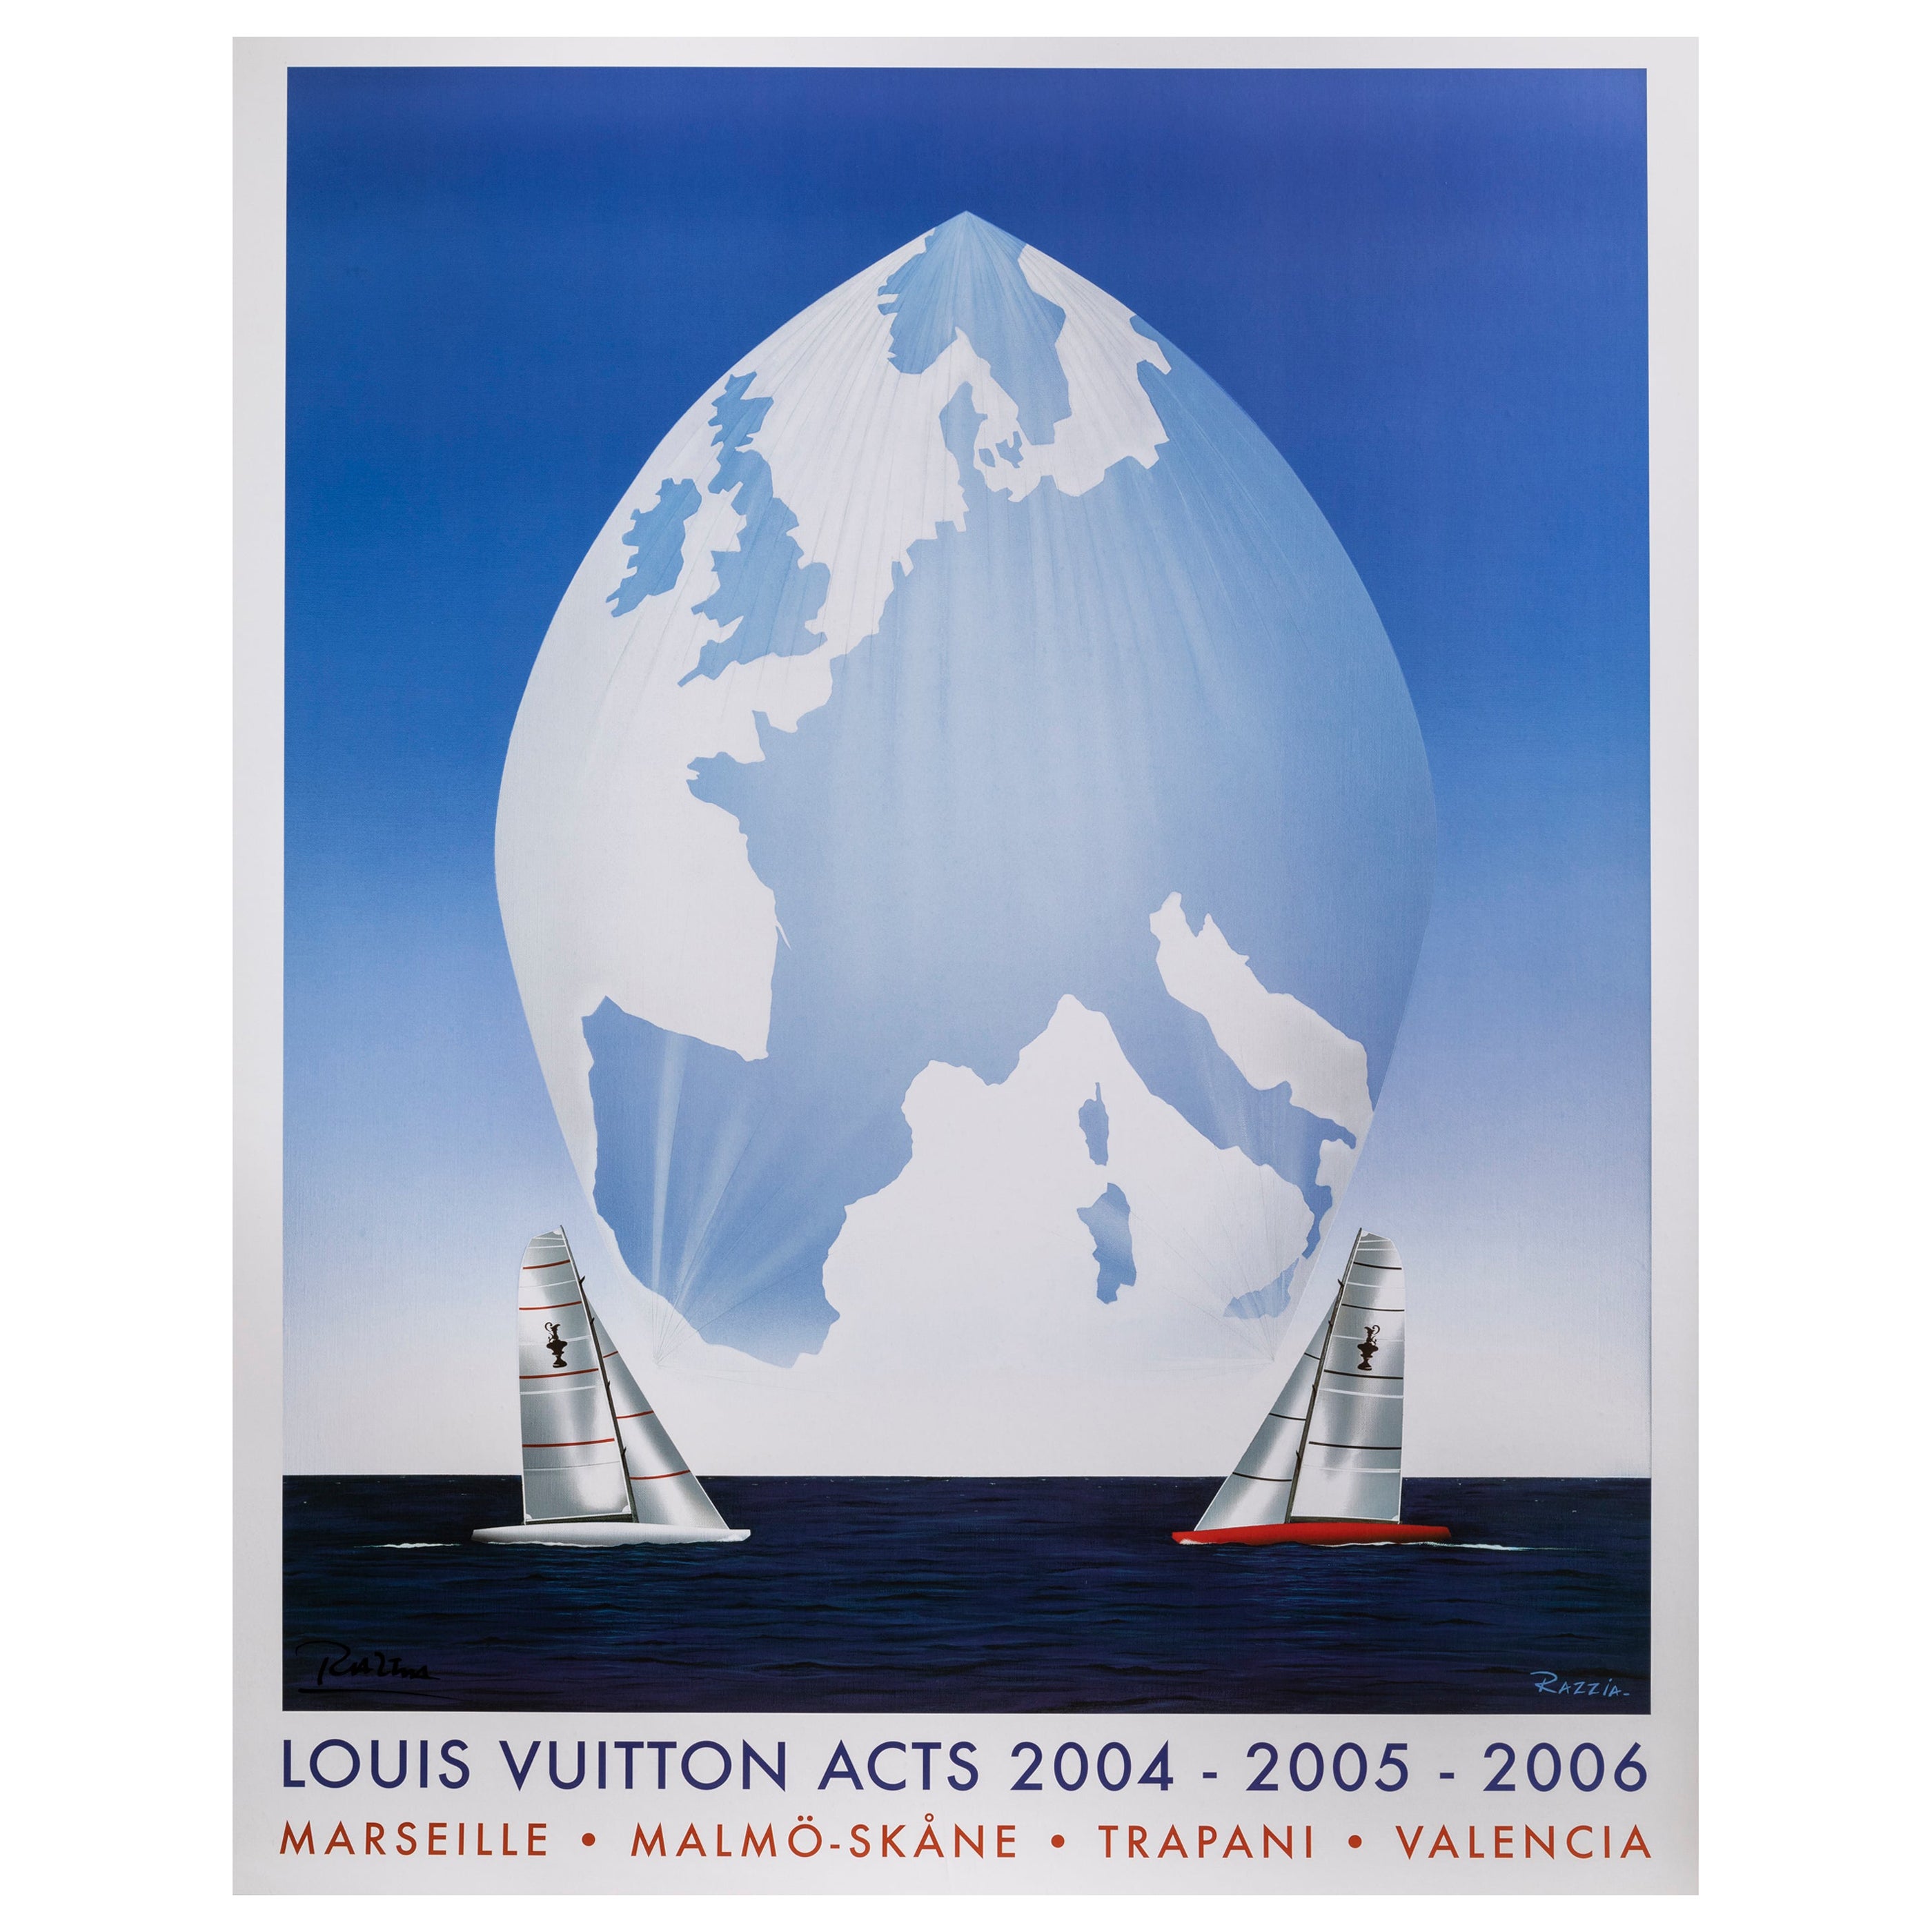 Razzia, Original Louis Vuitton ACTS, Sailing Ship, Boat, Marseille Spinaker 2006 For Sale